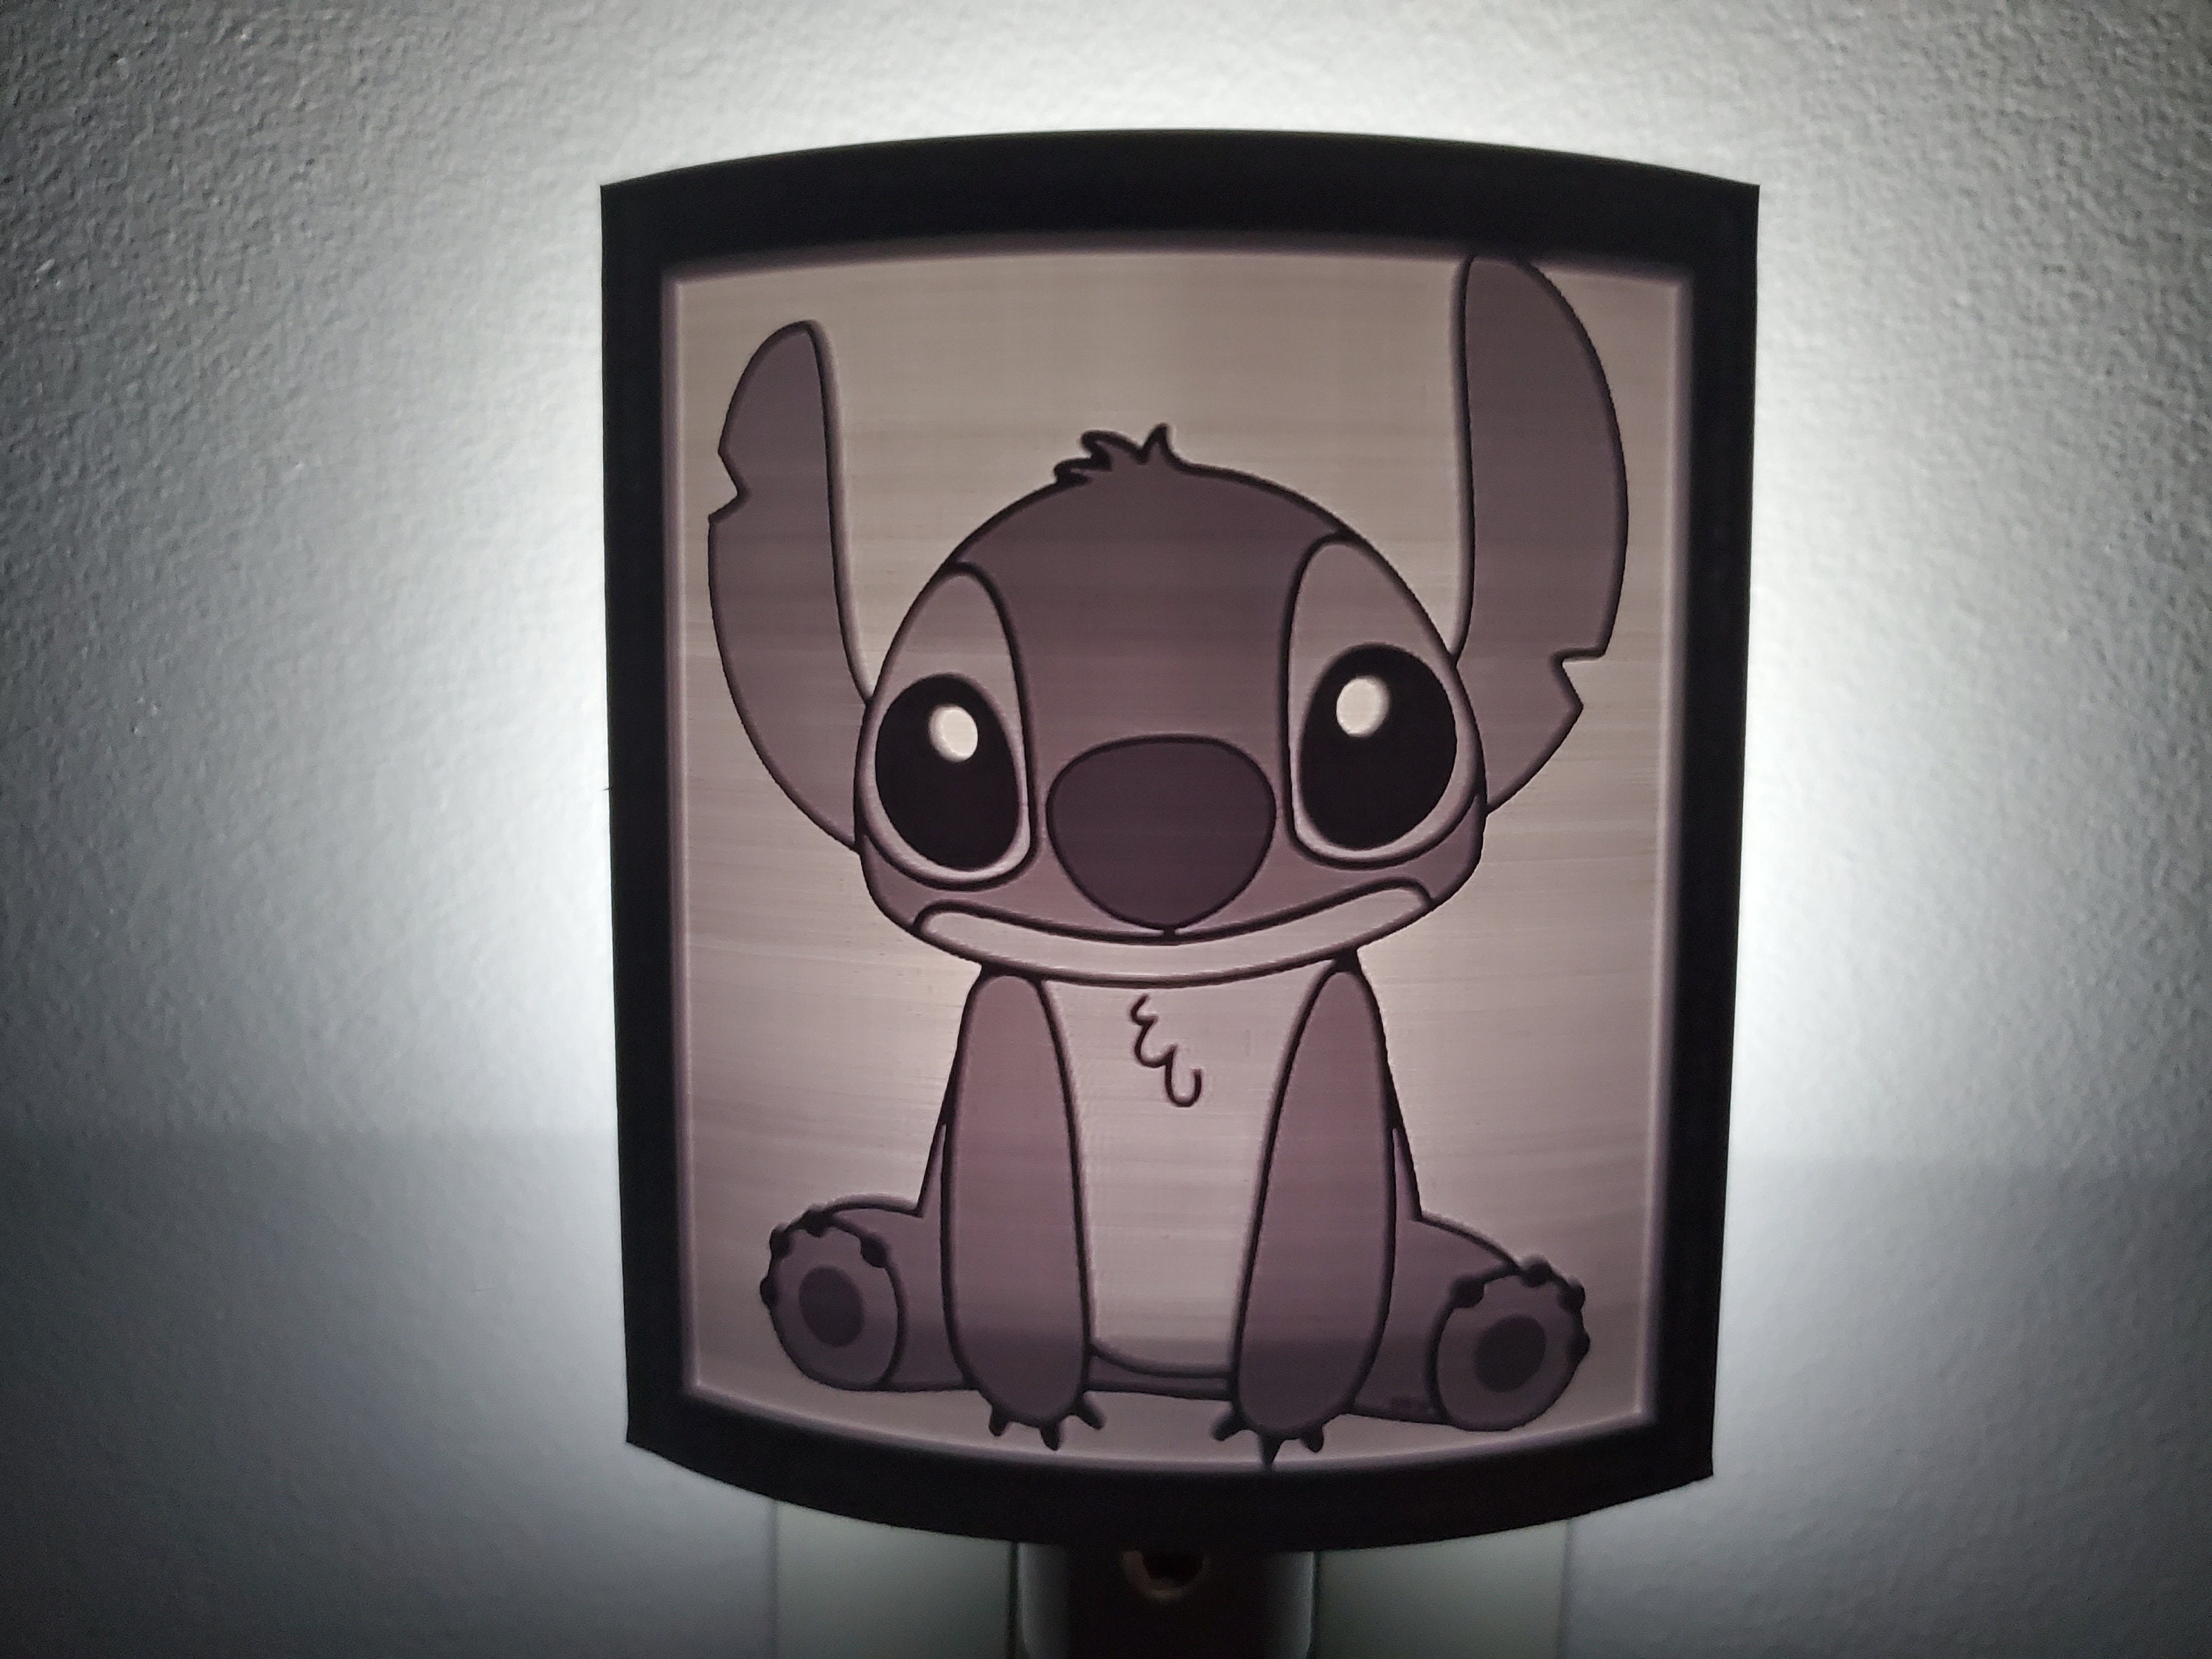 Stitch Nightlight, Lilo and Stitch, Personalized Lamp, Disneyland